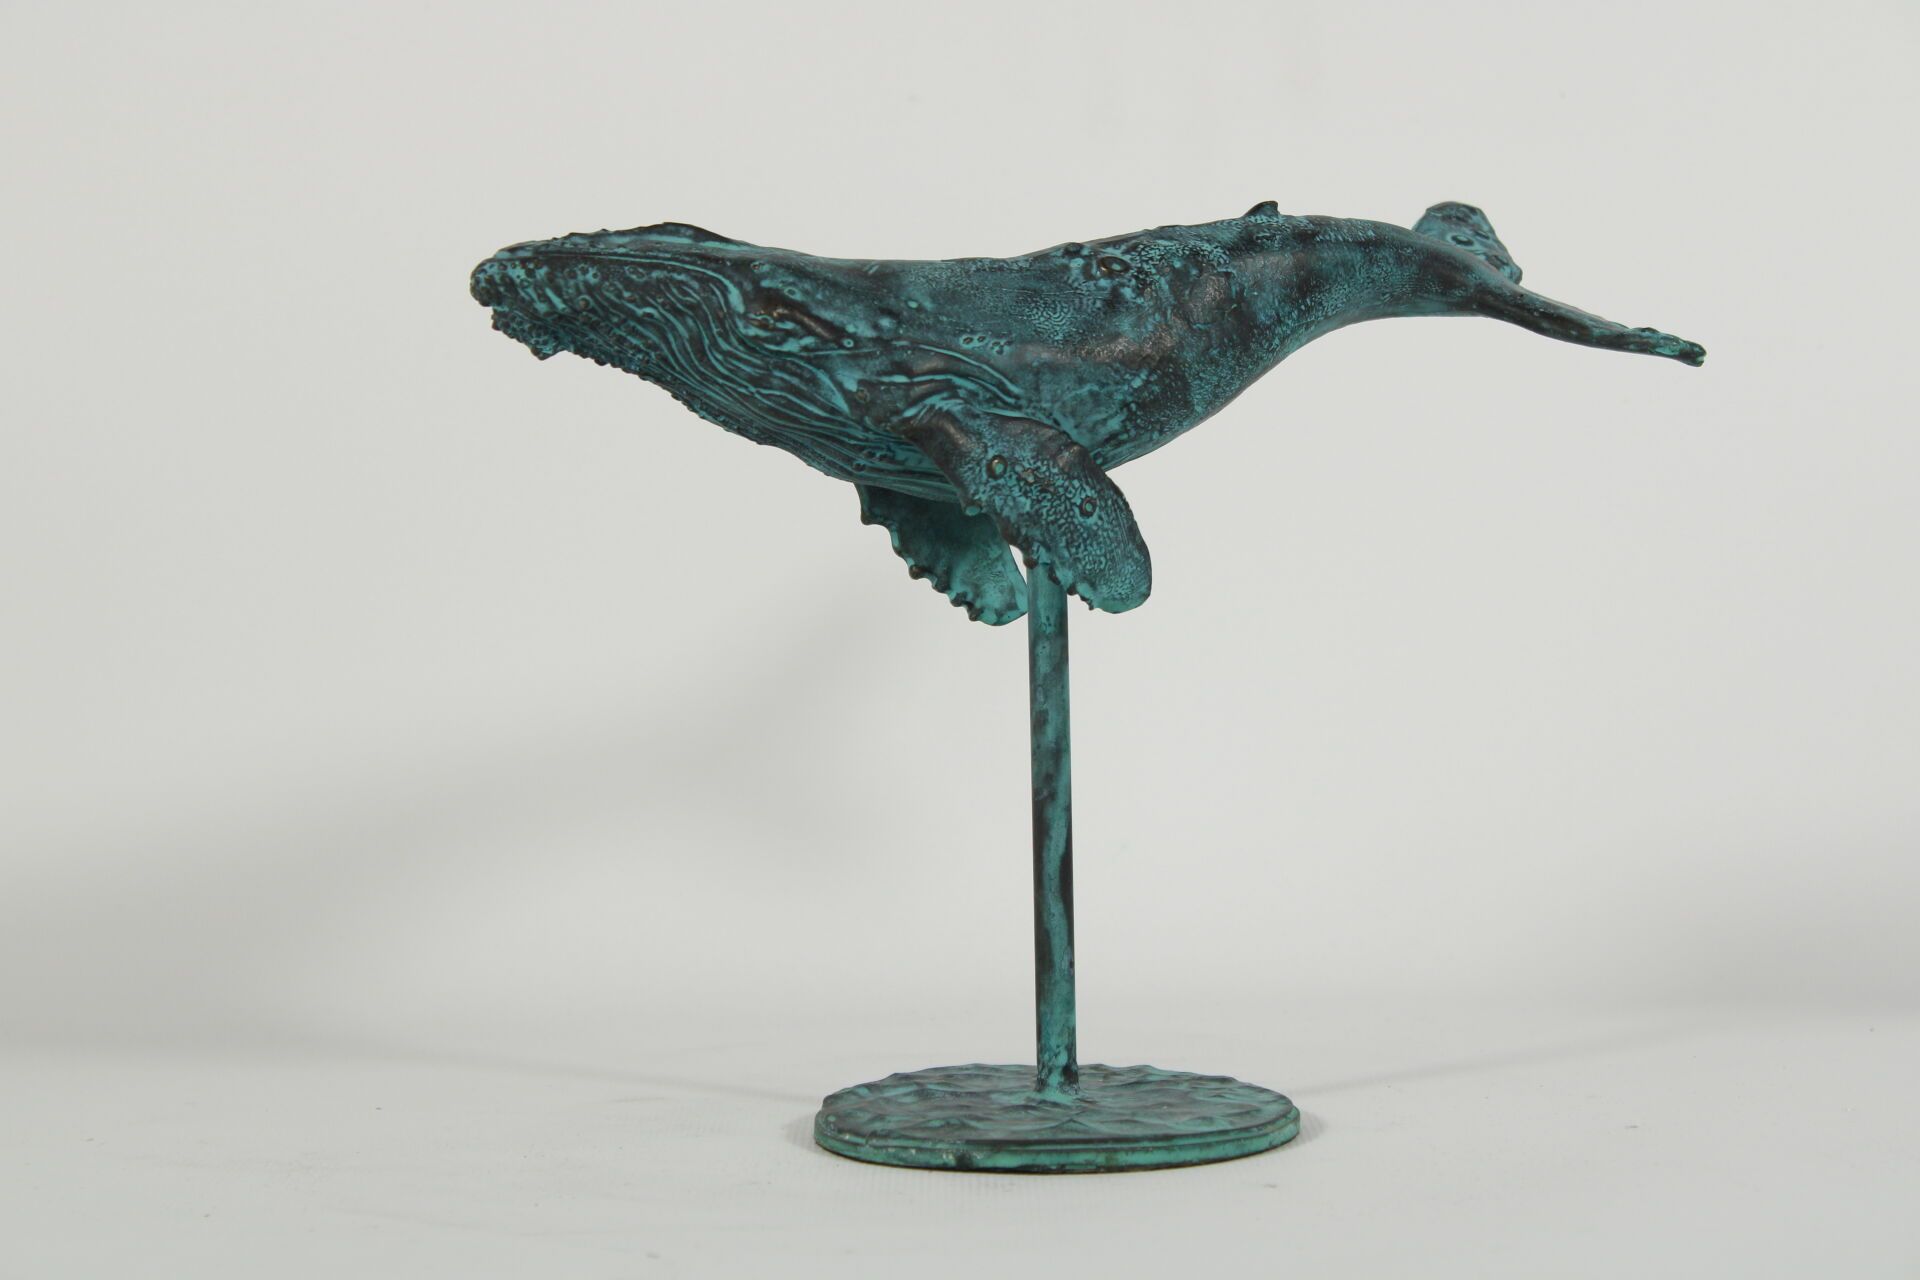 Null 鲸鱼，带蓝色铜锈的青铜雕塑，带底座。签名为 "Ruchos Bronze"。现代印刷品。
带底座尺寸：19x25 厘米